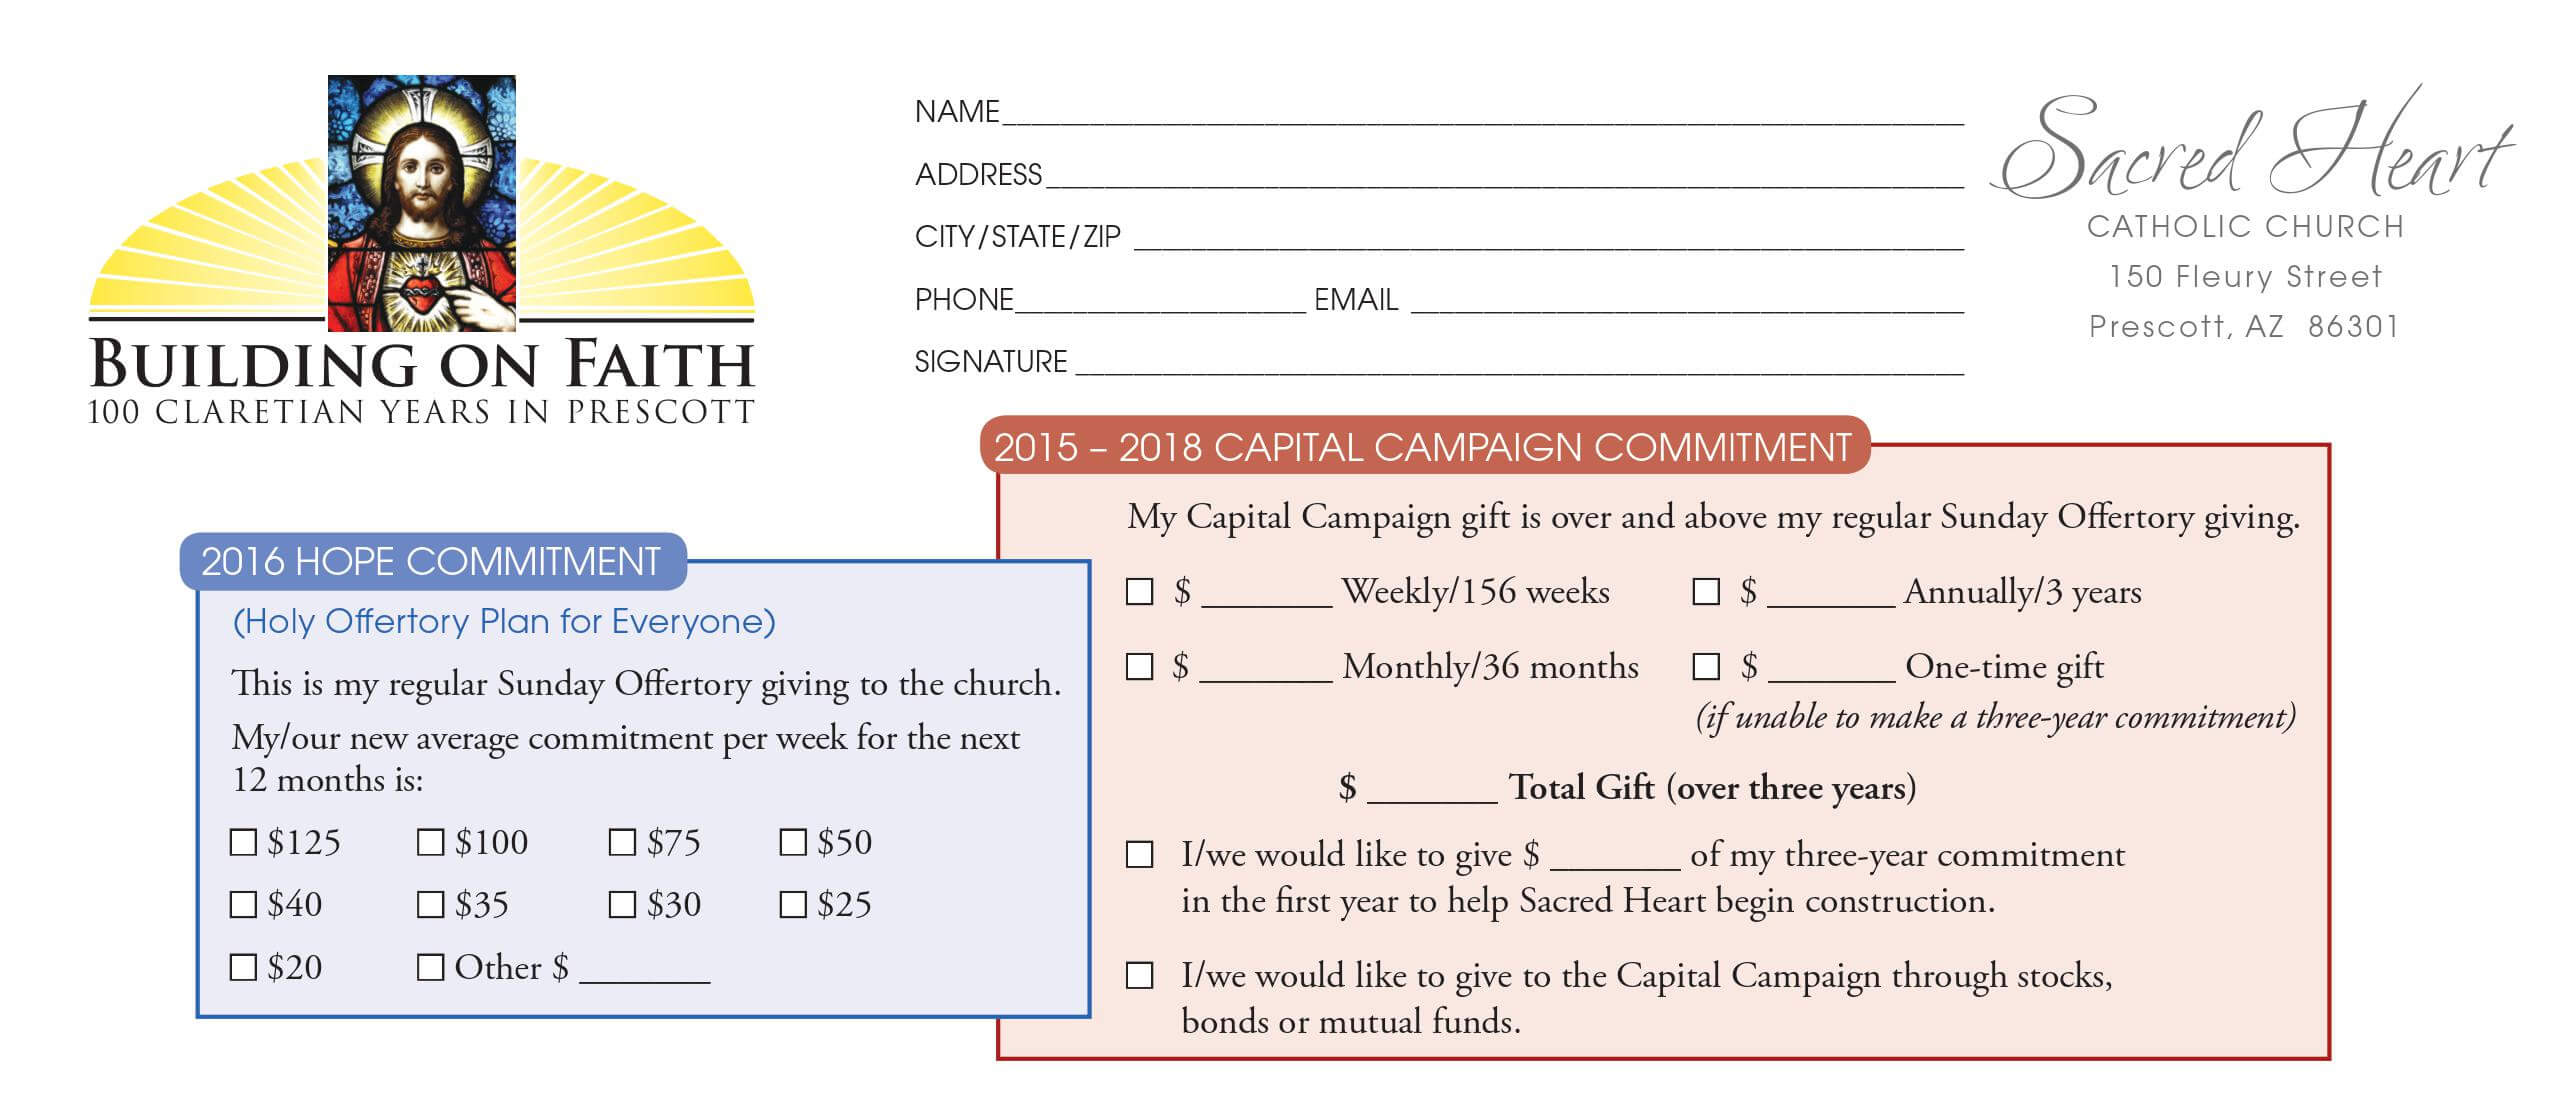 Church Capital Campaign Pledge Card Samples In Pledge Card Template For Church